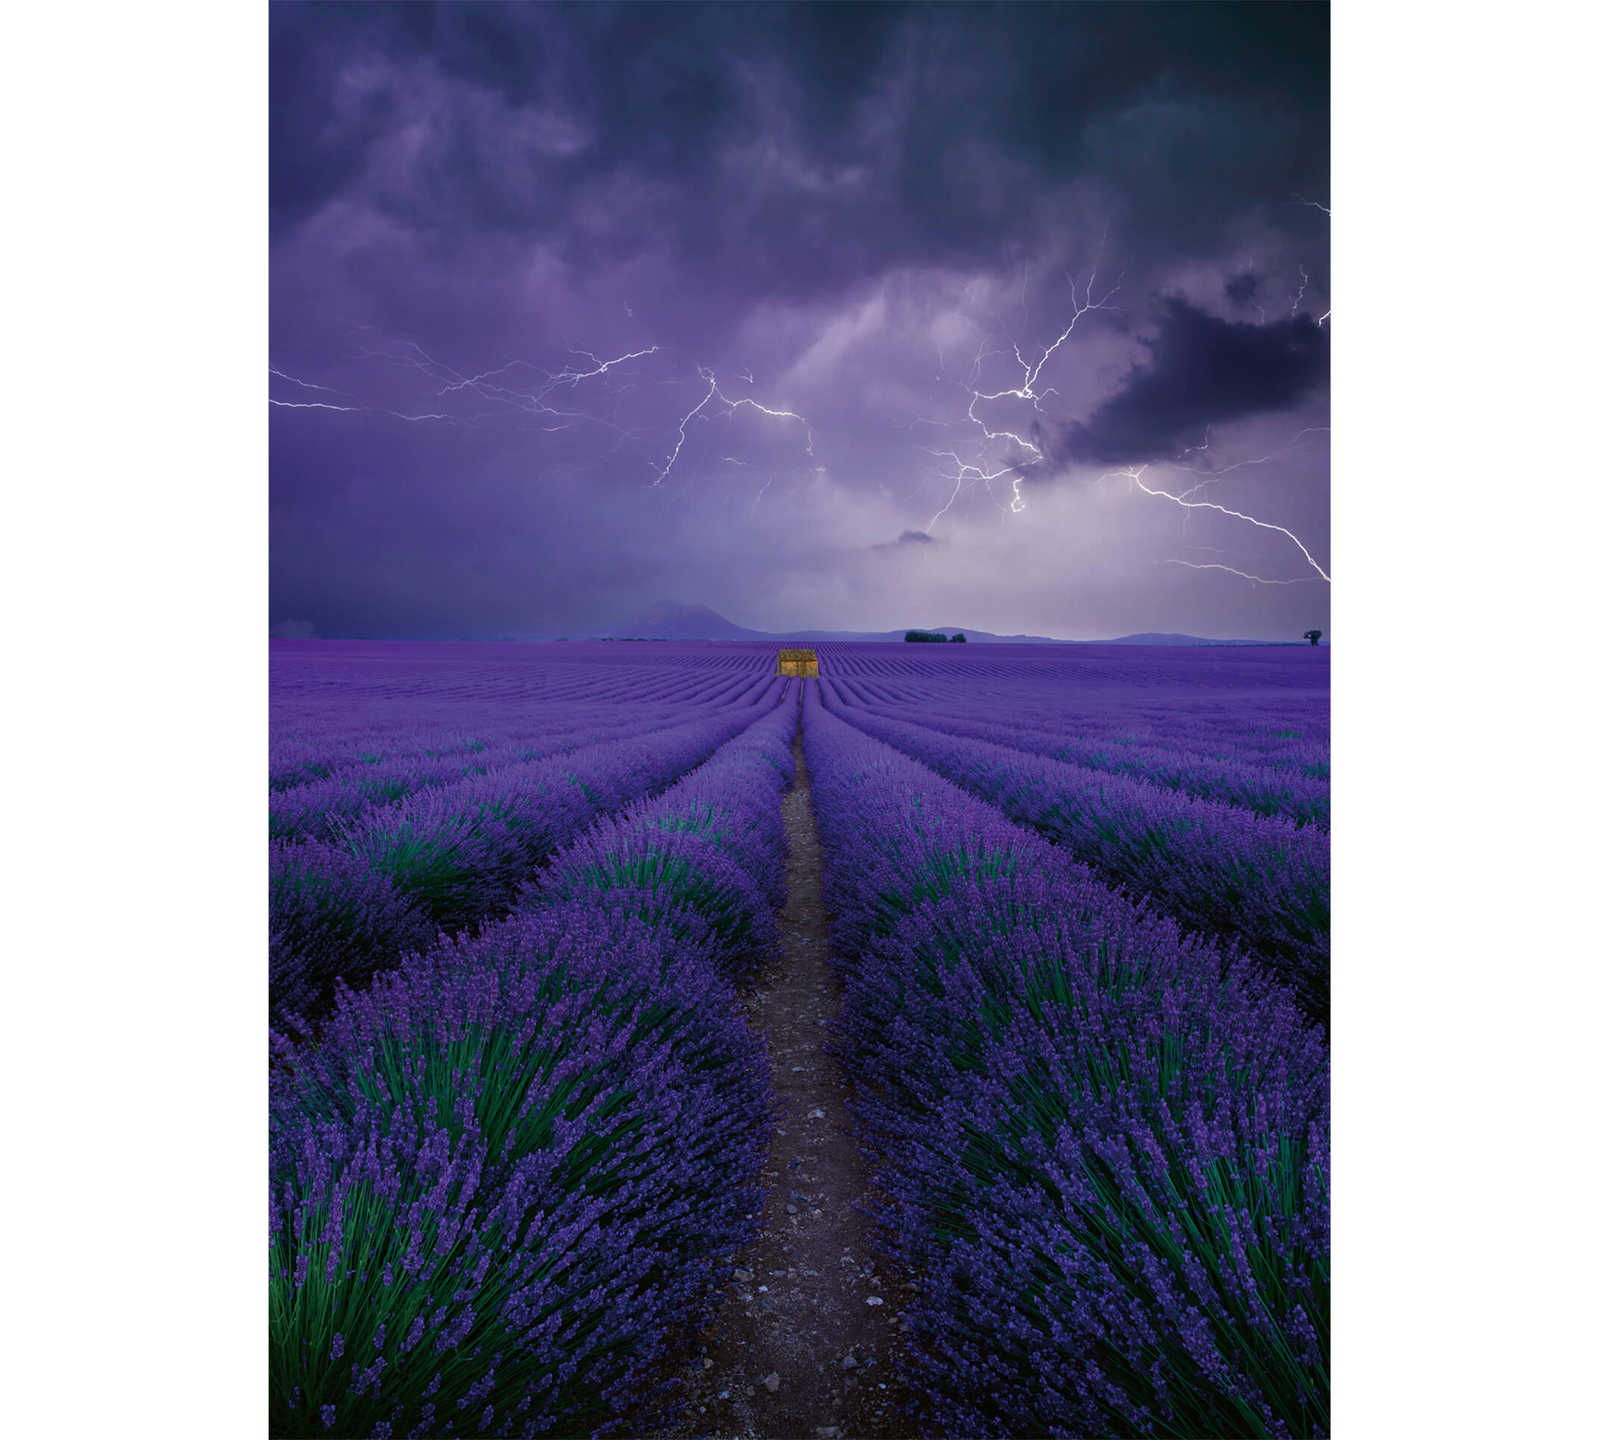         Fototapete Feld mit Lavendel – Violett, Grün, Braun
    